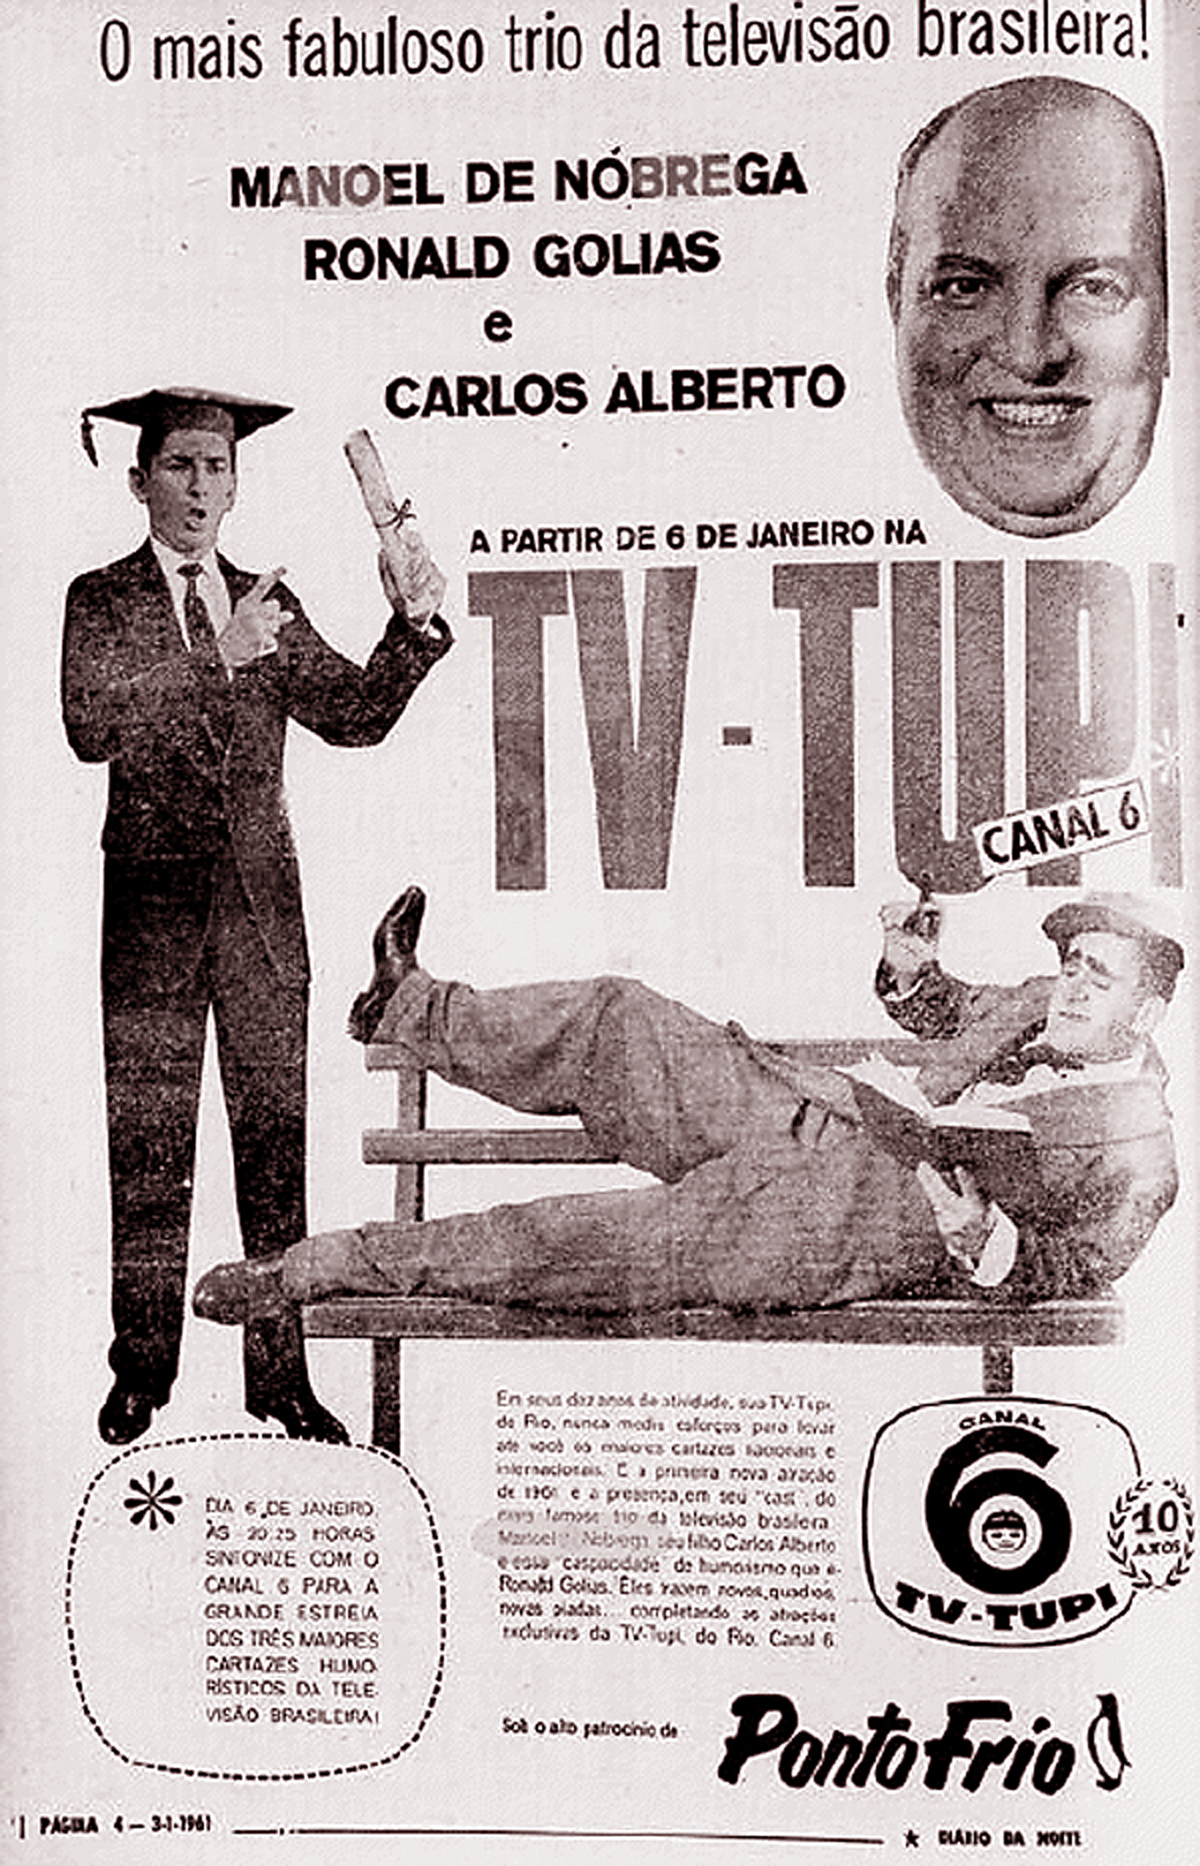 Propaganda da Tv Tupi Rio, 1961 <a style='float:right;color:#ccc' href='https://www3.al.sp.gov.br/repositorio/noticia/N-02-2013/fg121564.jpg' target=_blank><i class='bi bi-zoom-in'></i> Clique para ver a imagem </a>